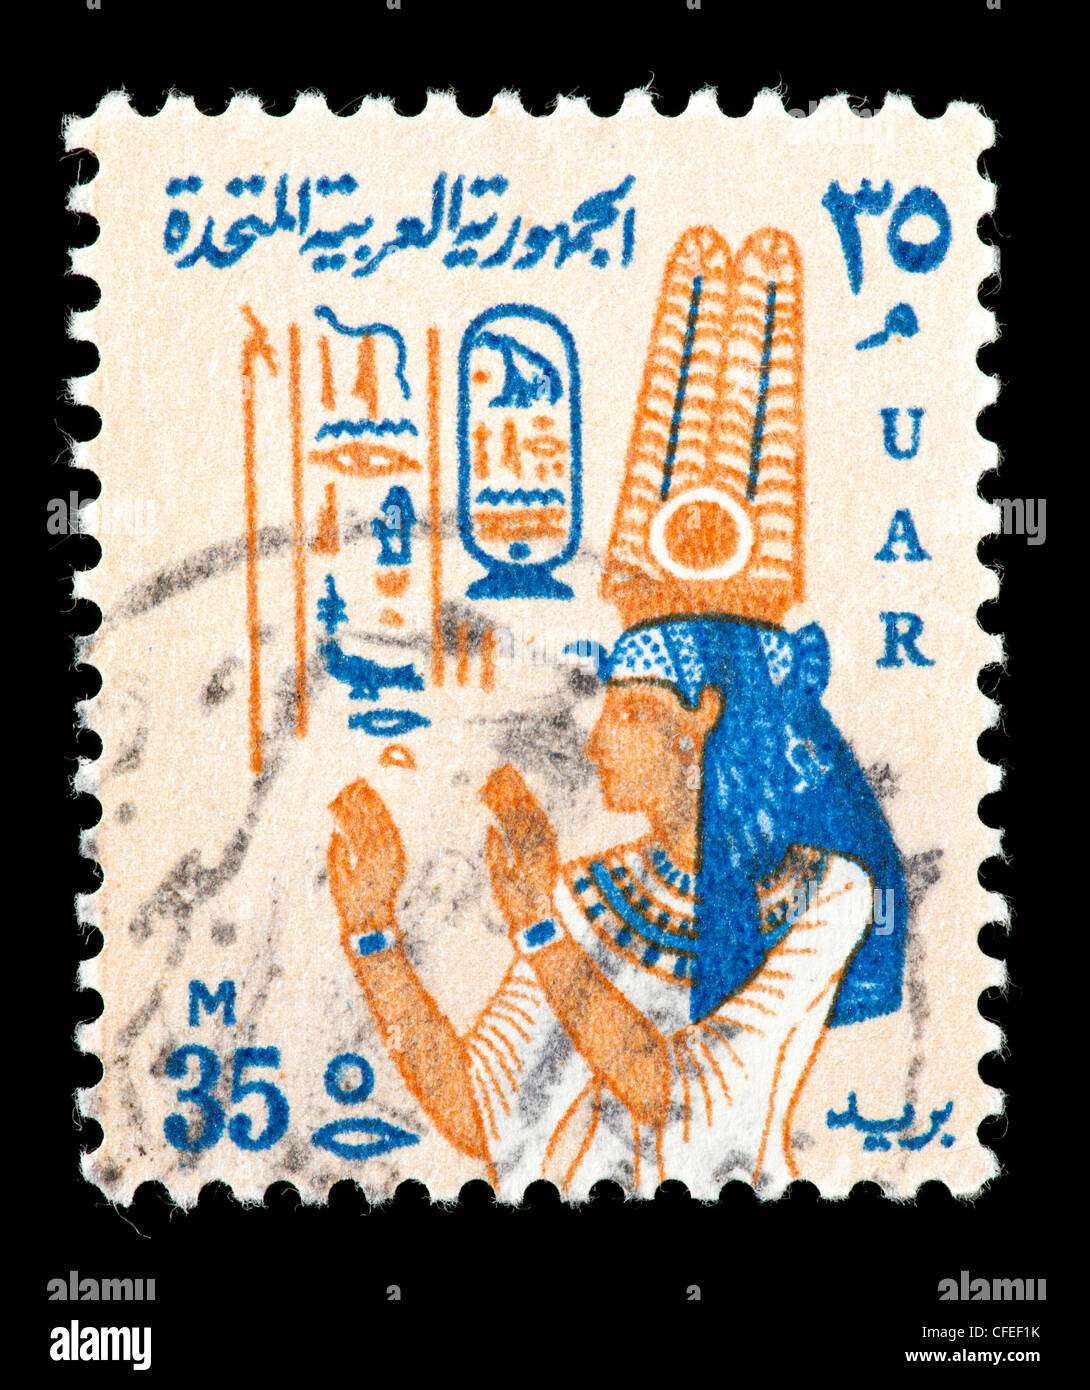 Postage stamp from Egypt (United Arab Republic) depicting Nefertari. Stock Photo